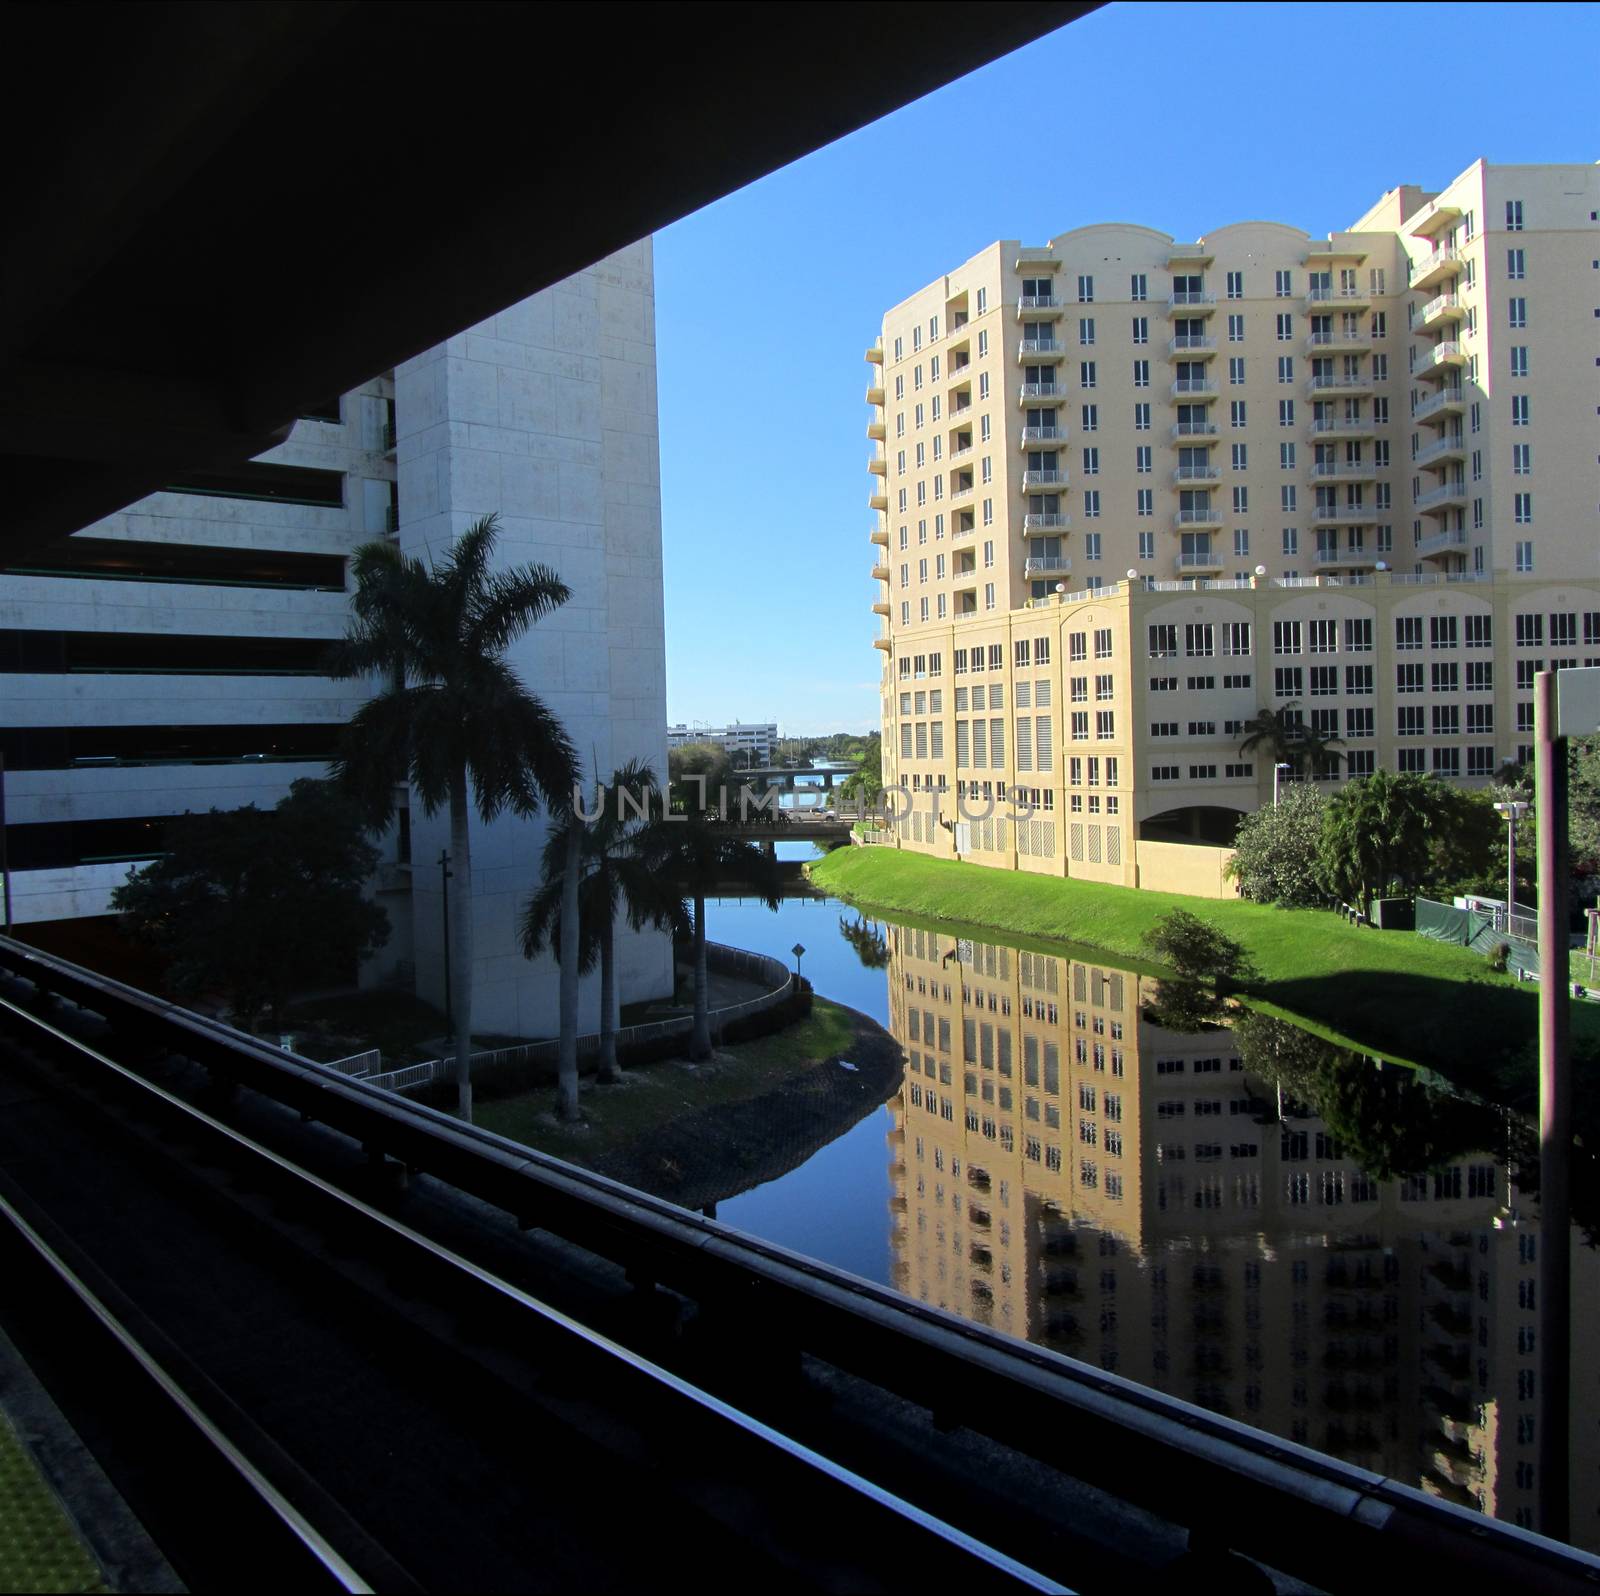 Miami USA downtown panoramic view by JRTBurr